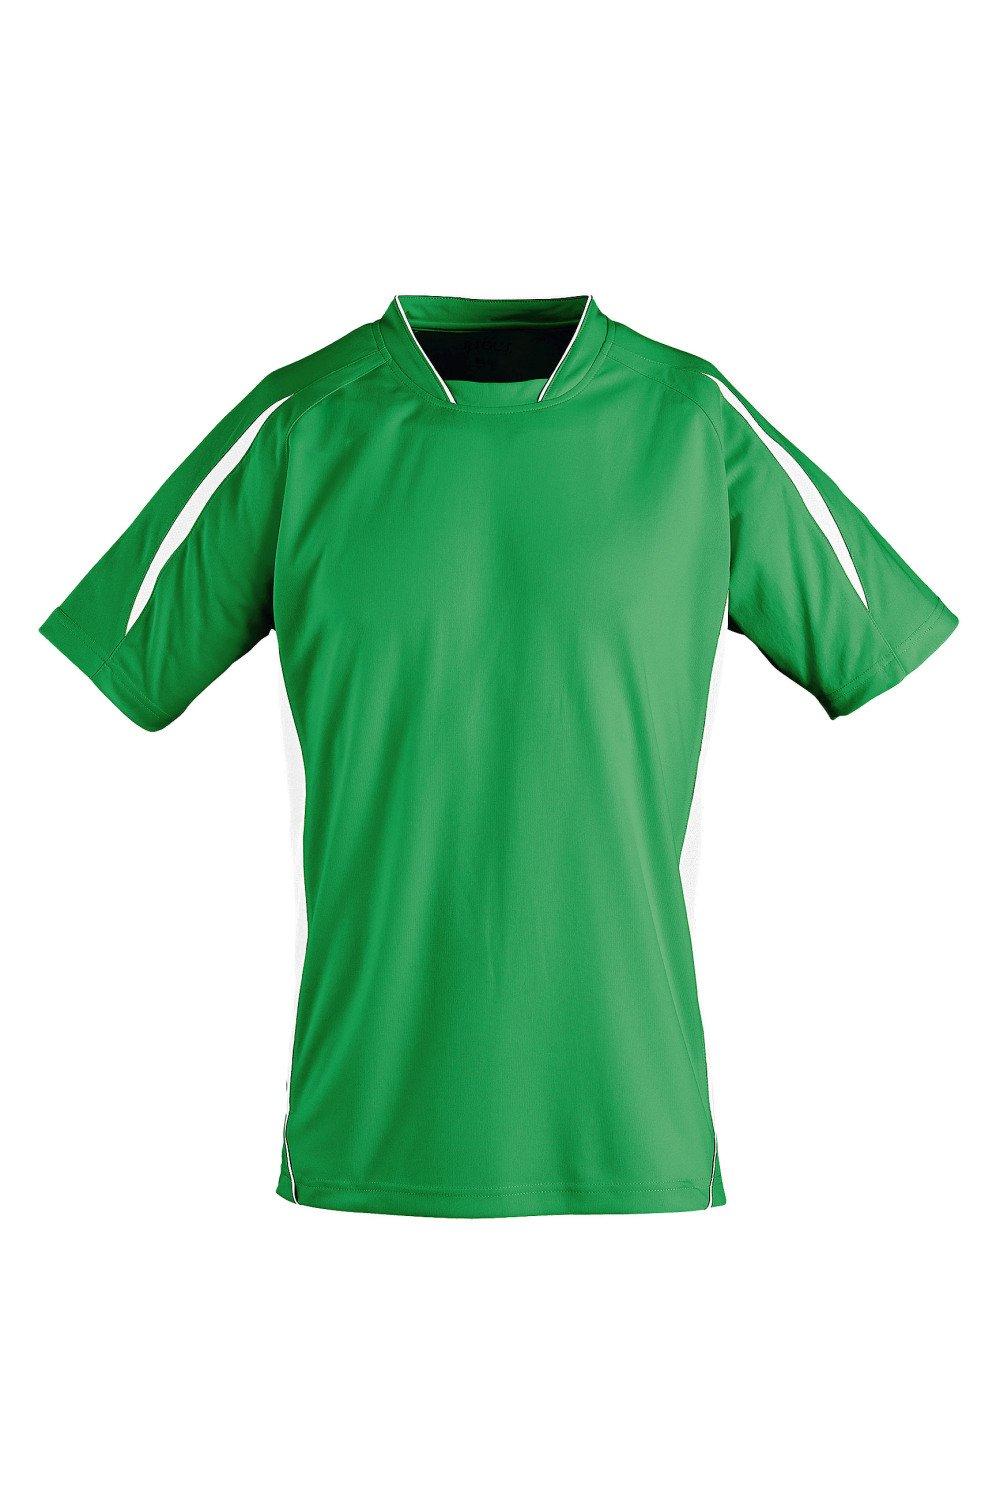 Maracana 2 Short Sleeve Football T-Shirt